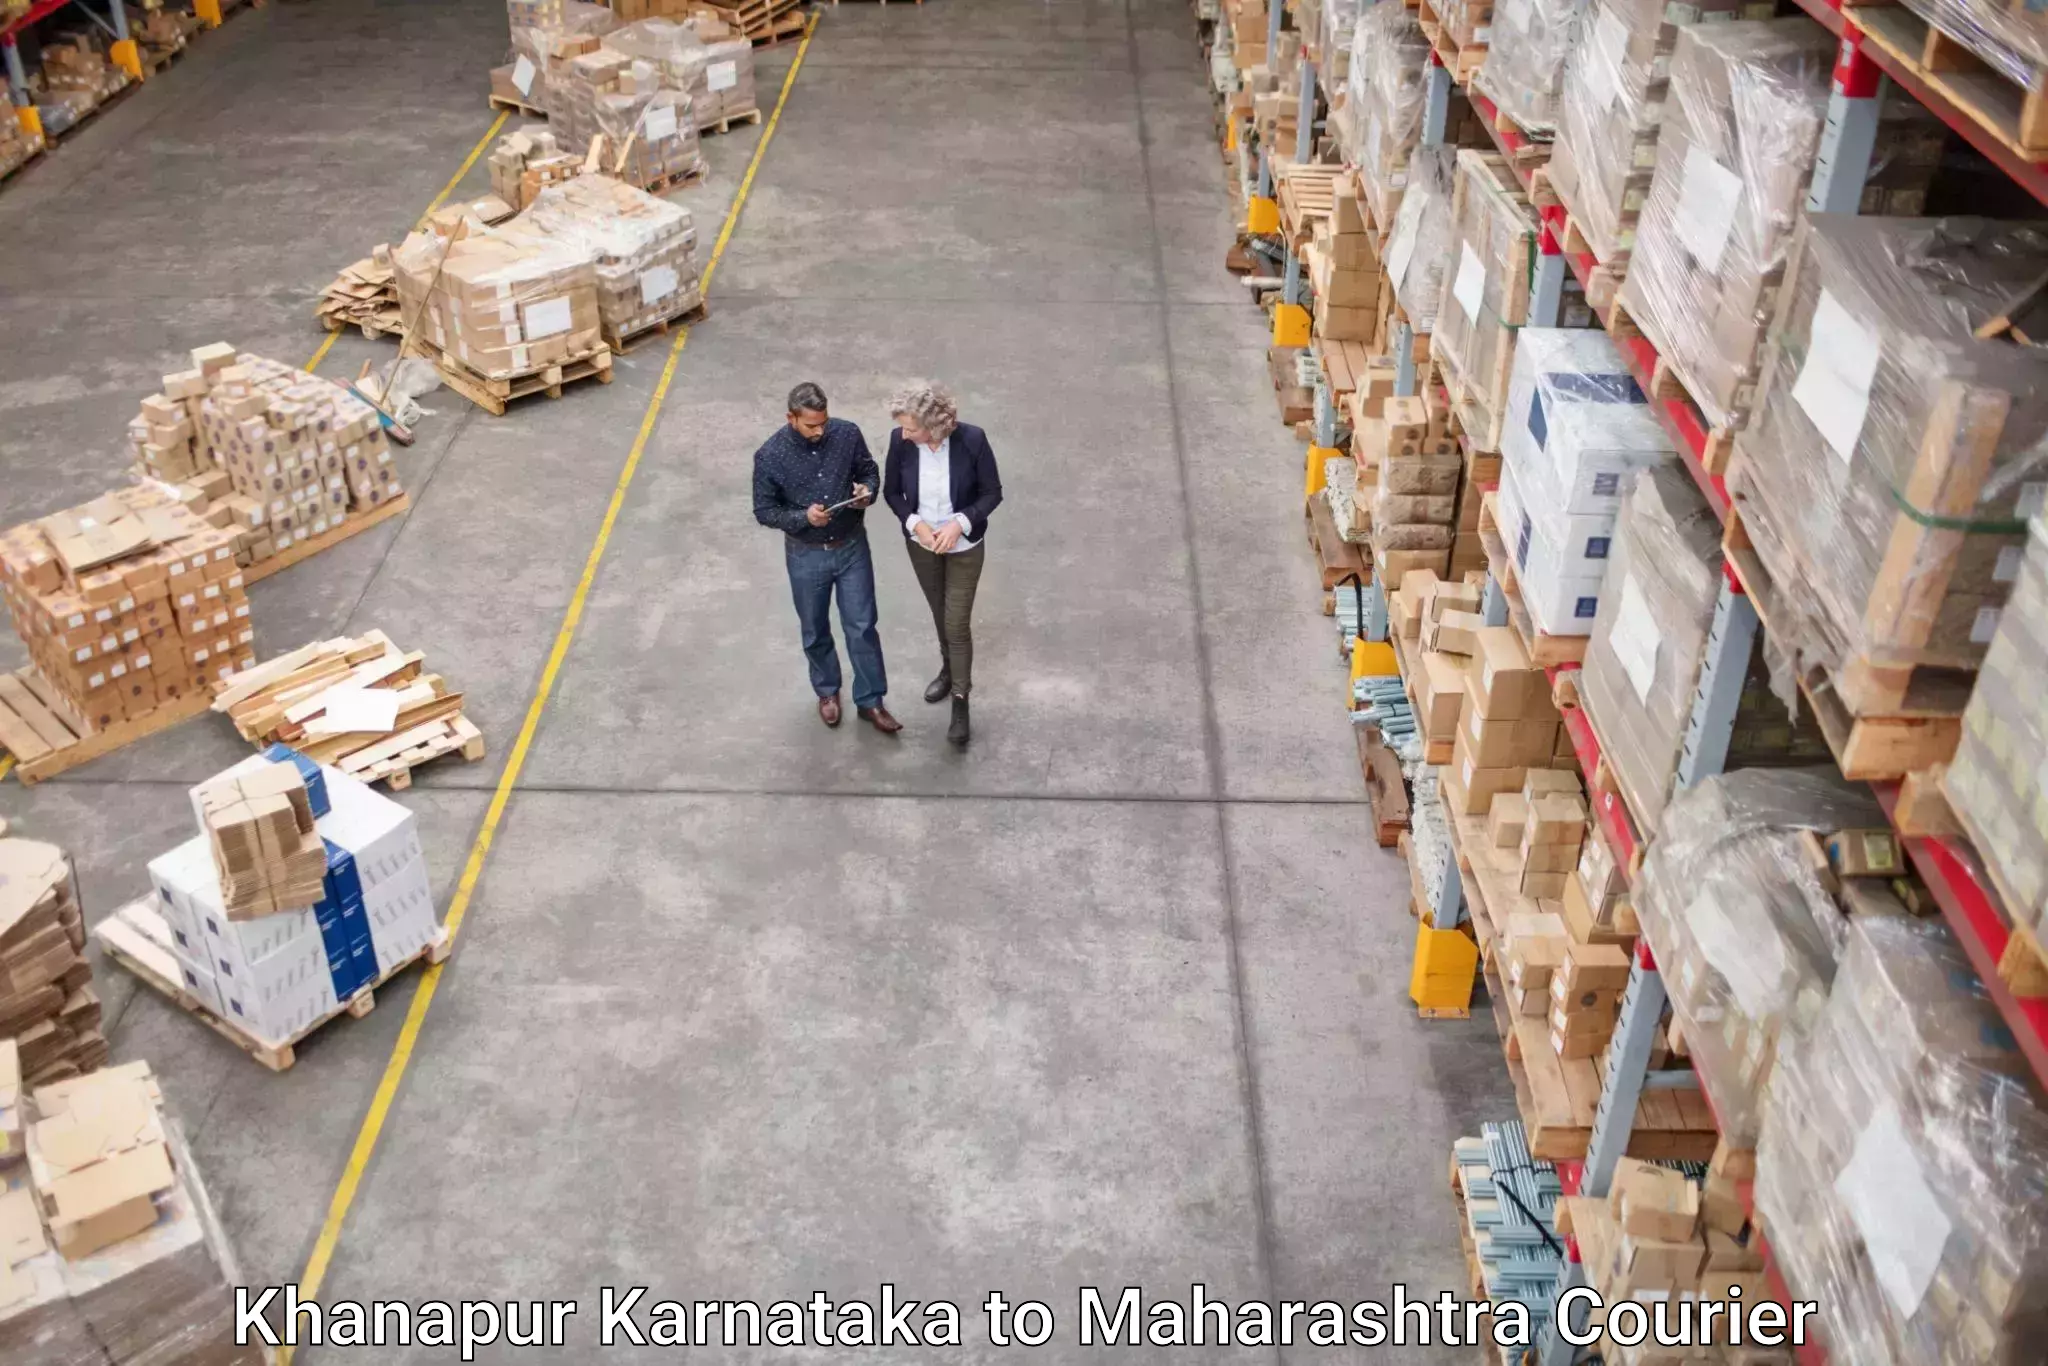 High-performance logistics Khanapur Karnataka to Georai